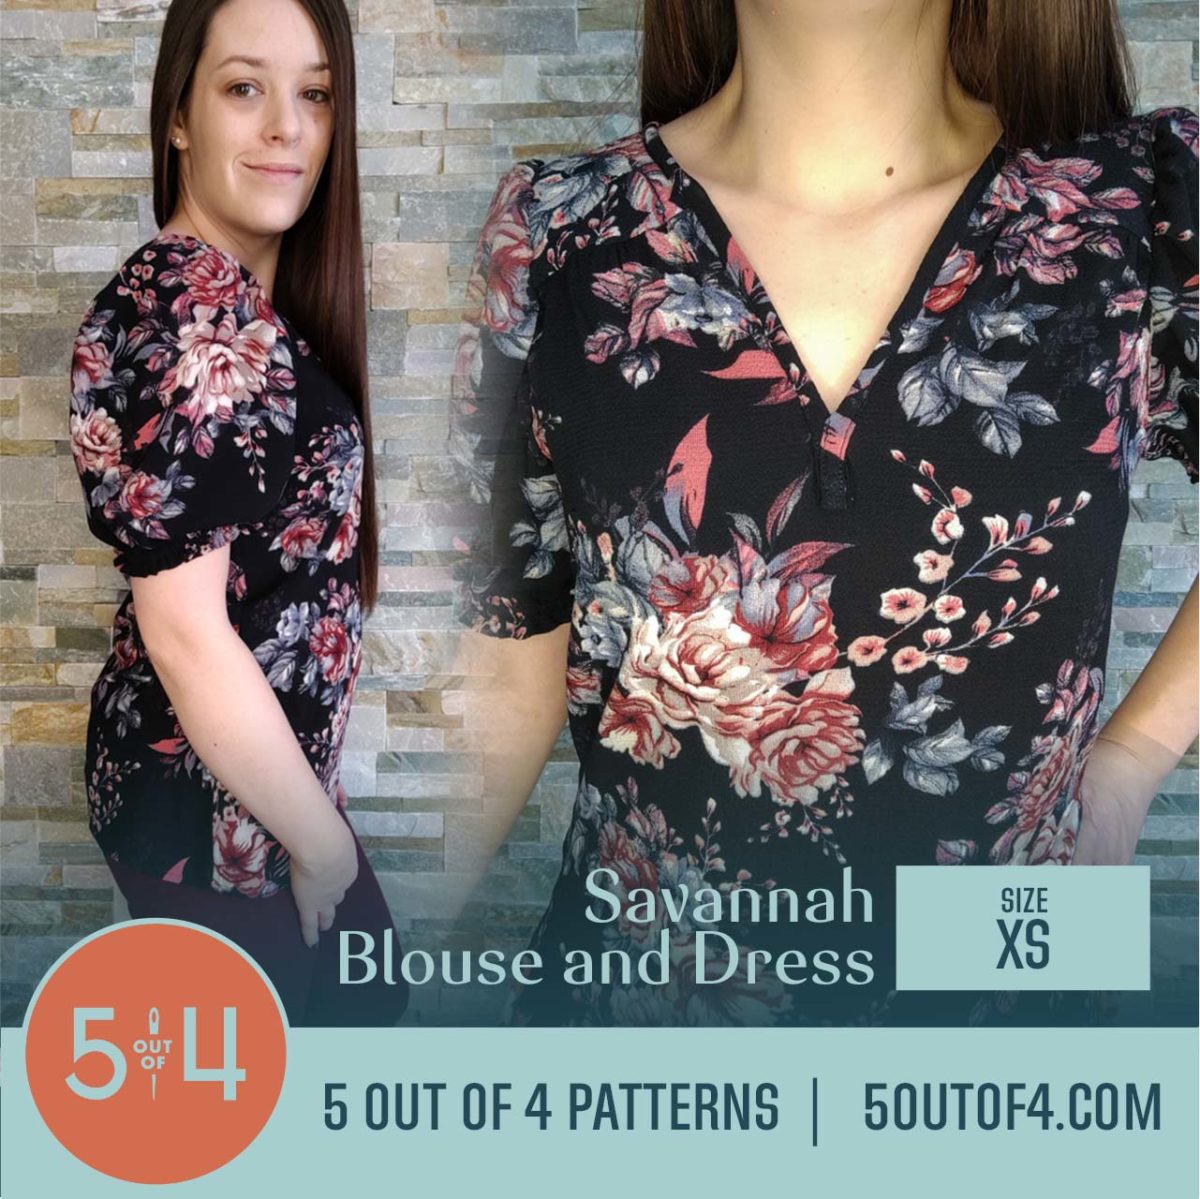 5oo4 Patterns Savannah blouse size XS